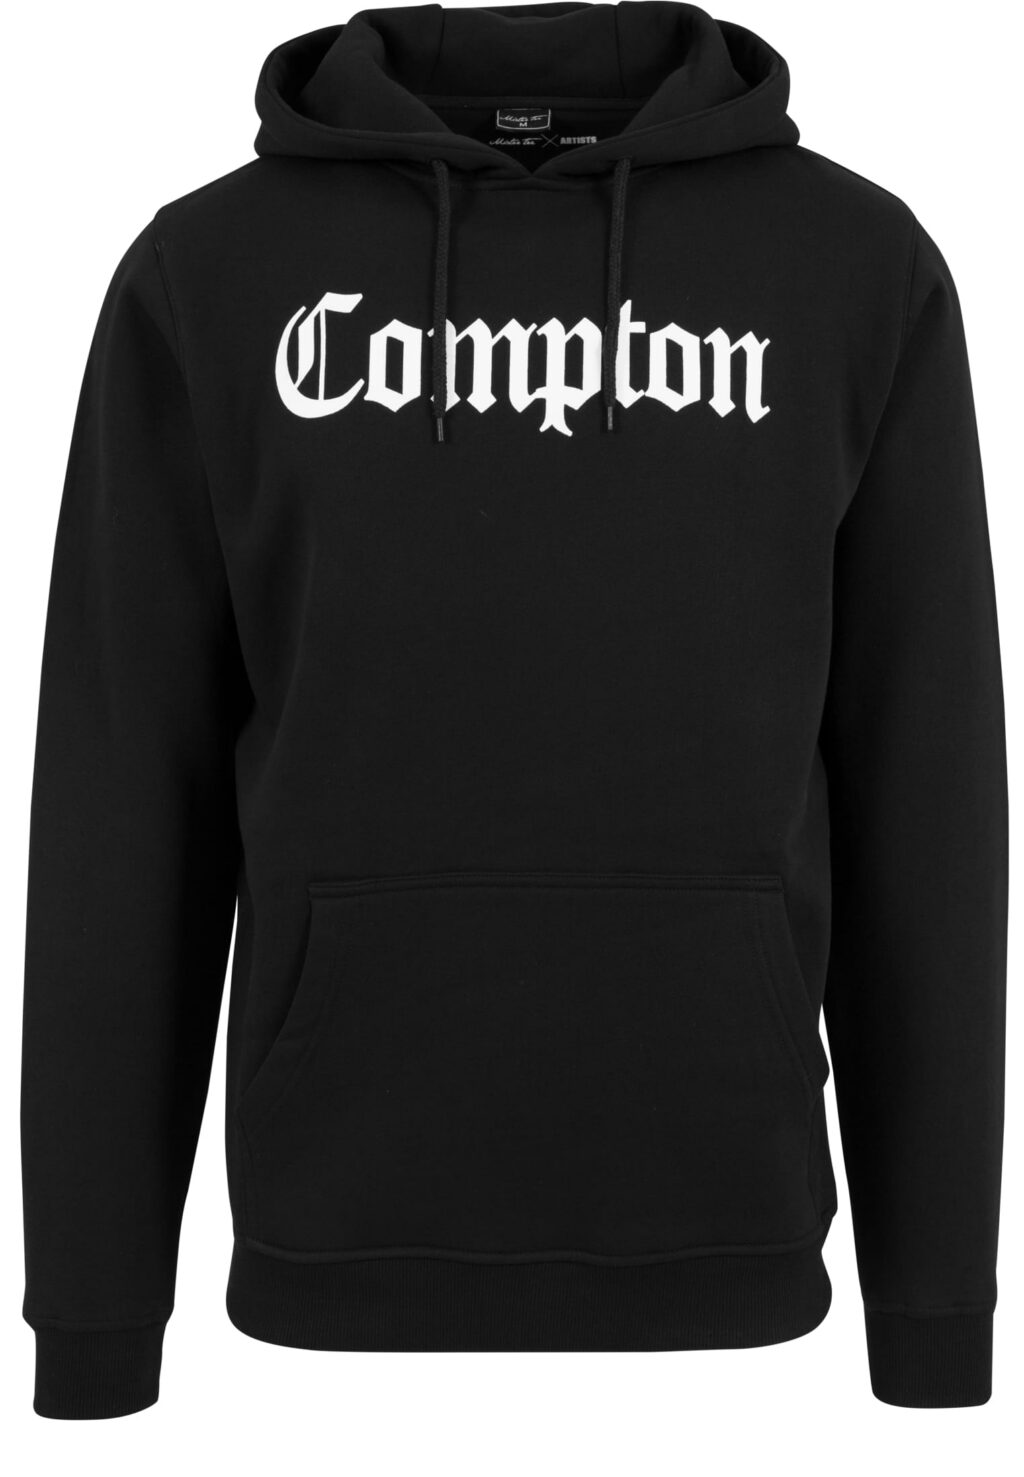 Compton Hoody black MT269